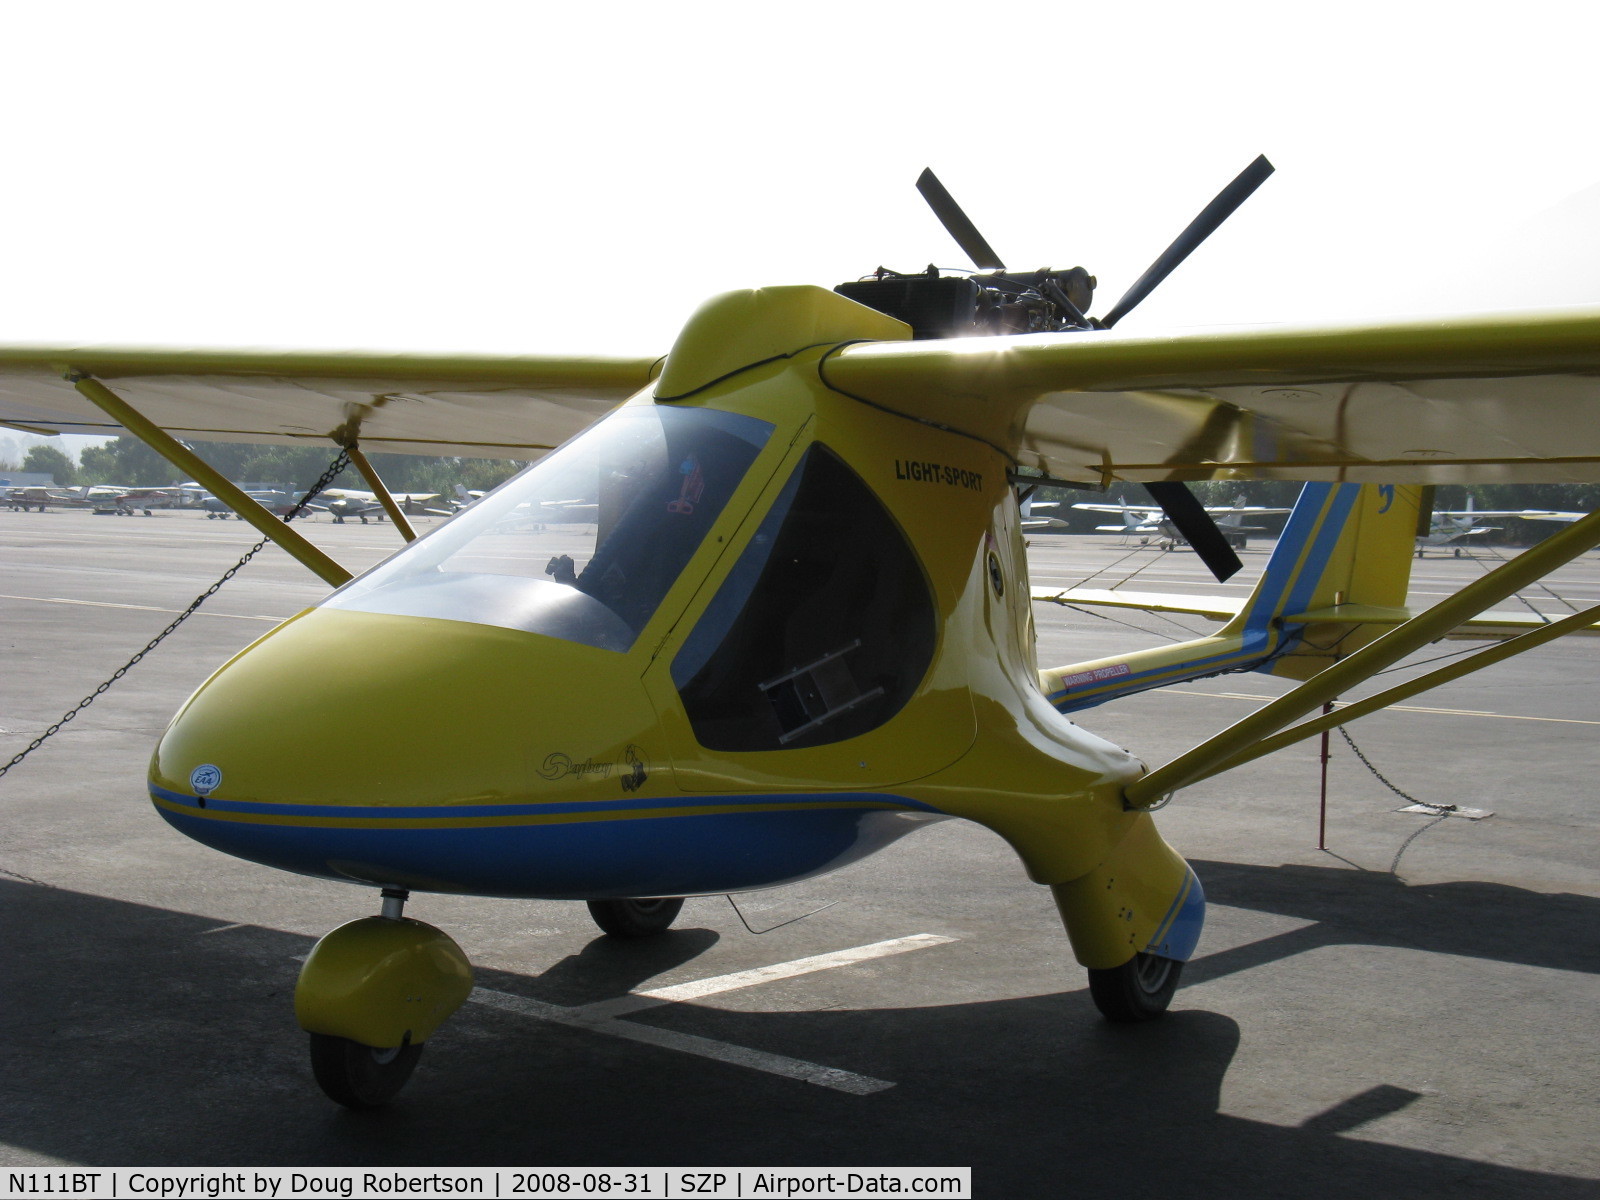 N111BT, 2004 Interplane Skyboy C/N 084/2004, 2004 Interplane Sro SKYBOY, Rotax 912S 100 Hp